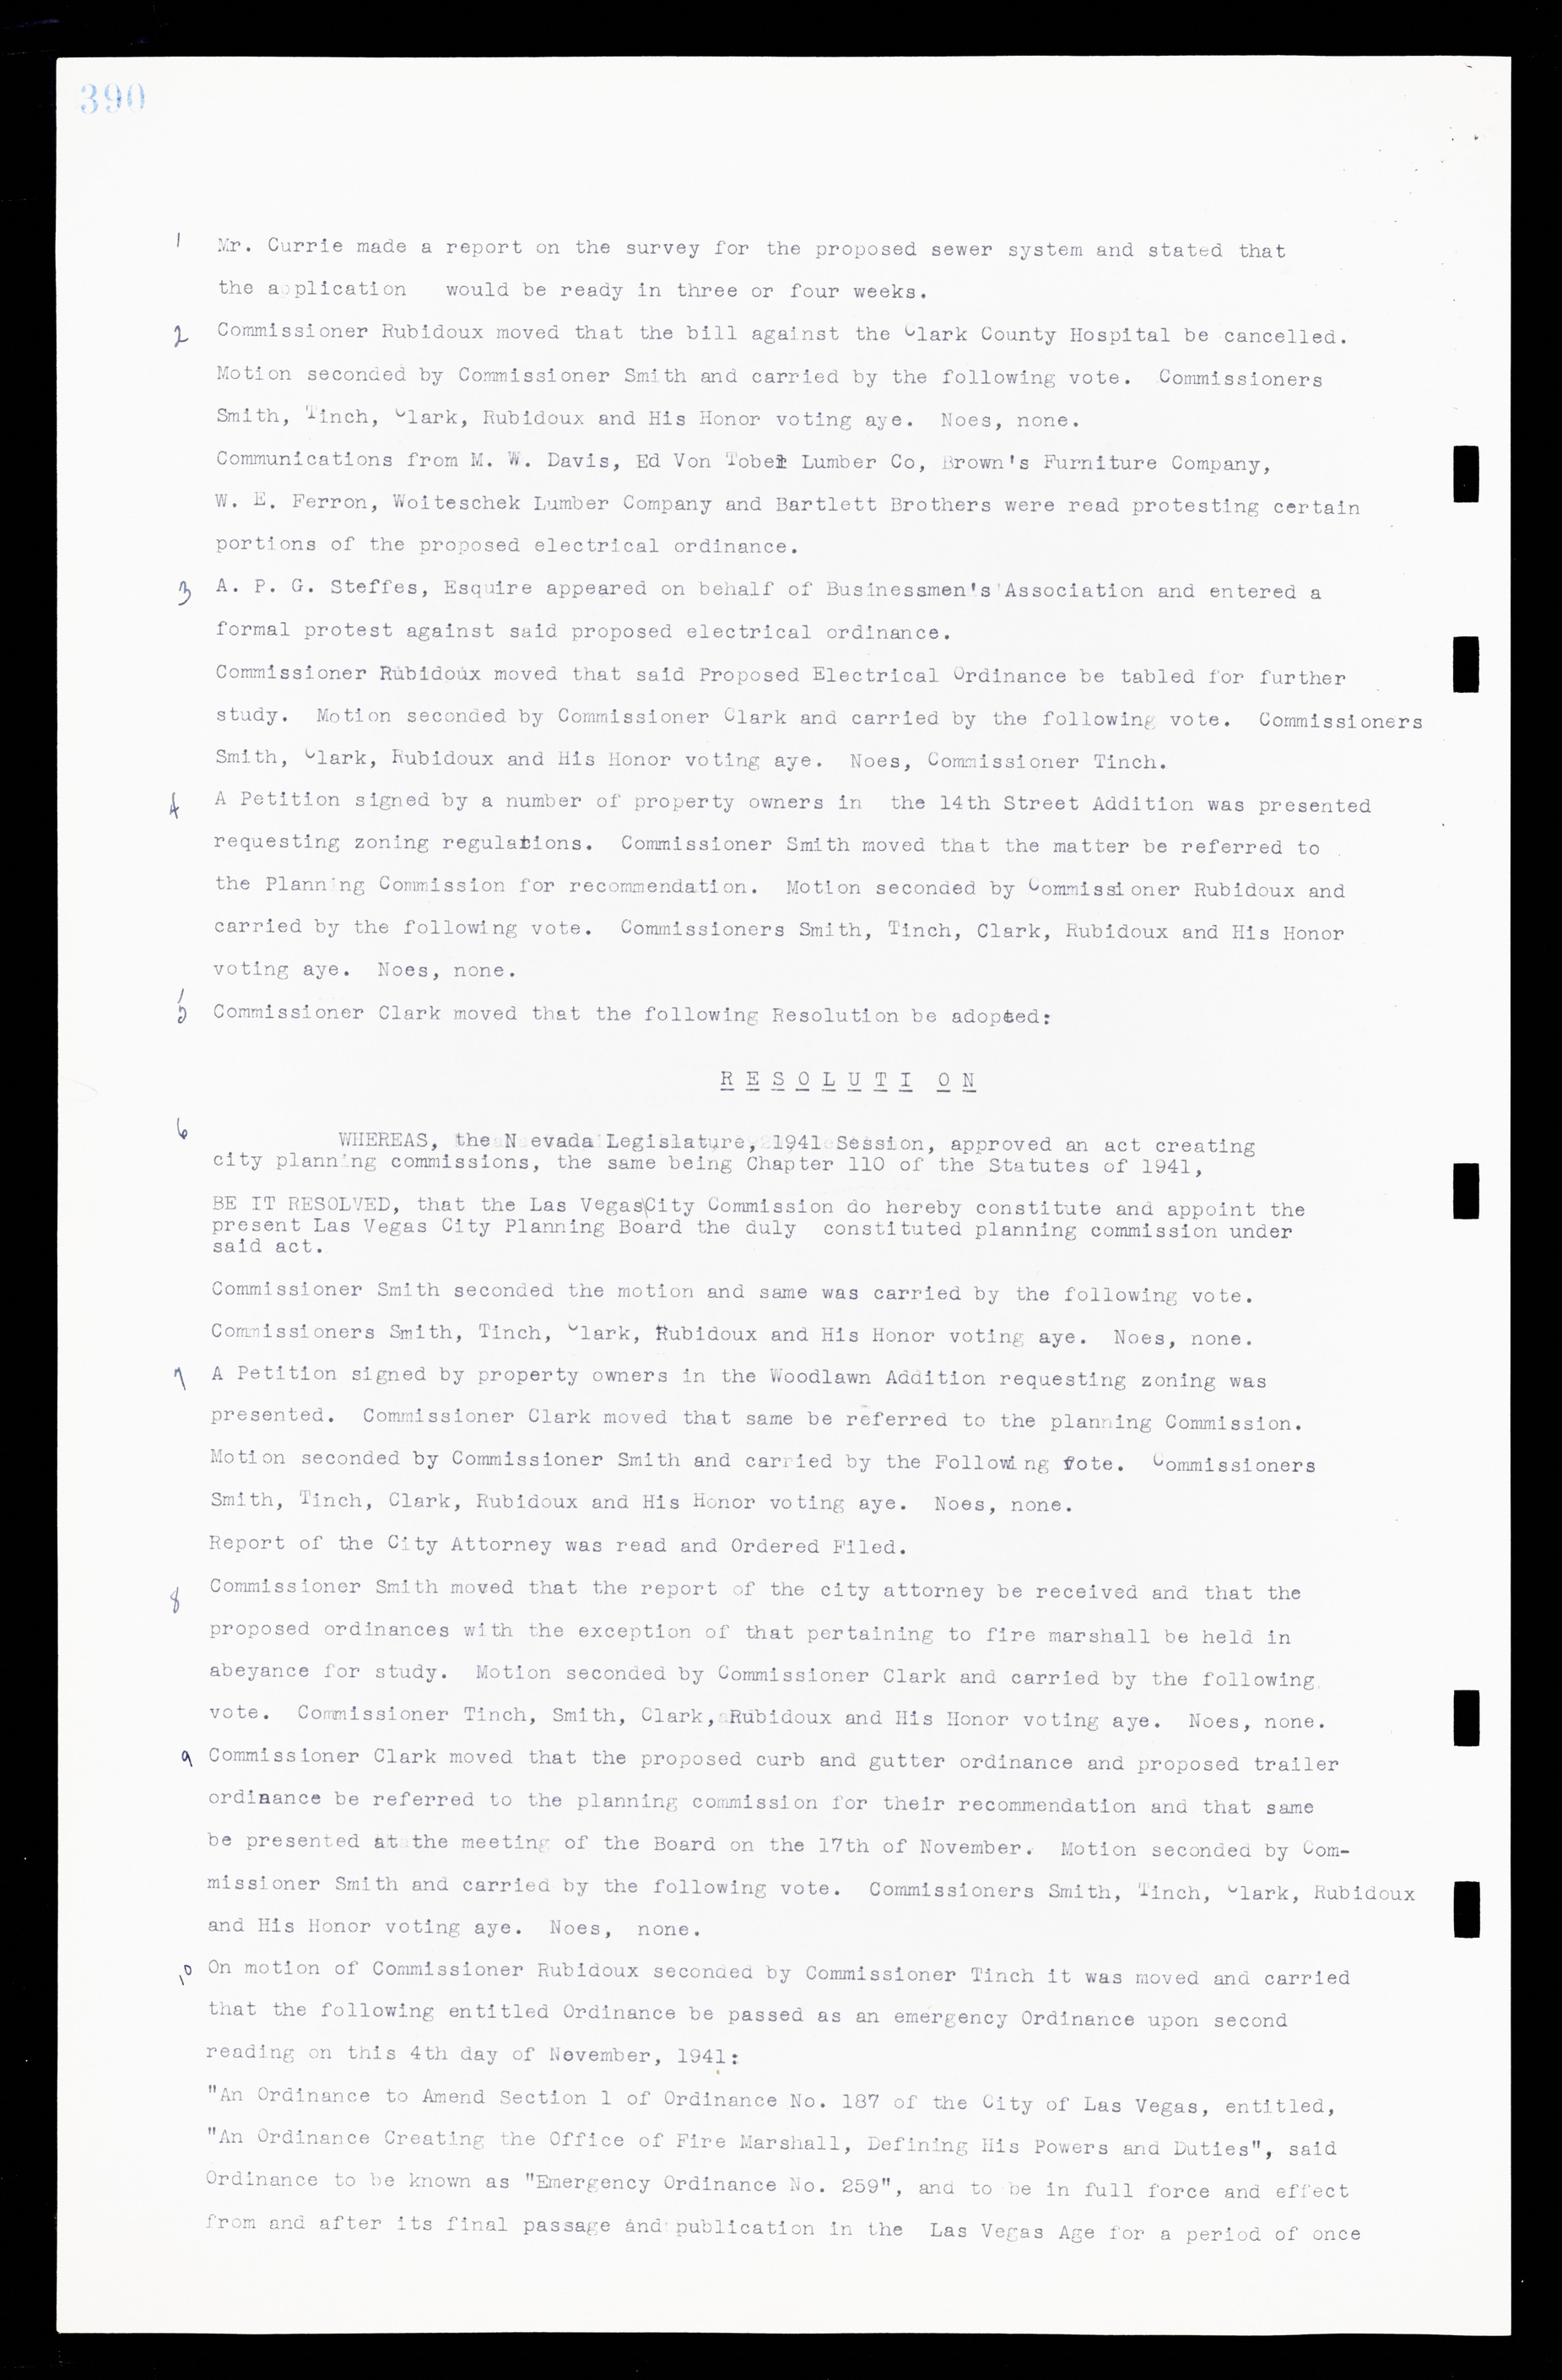 Las Vegas City Commission Minutes, February 17, 1937 to August 4, 1942, lvc000004-416